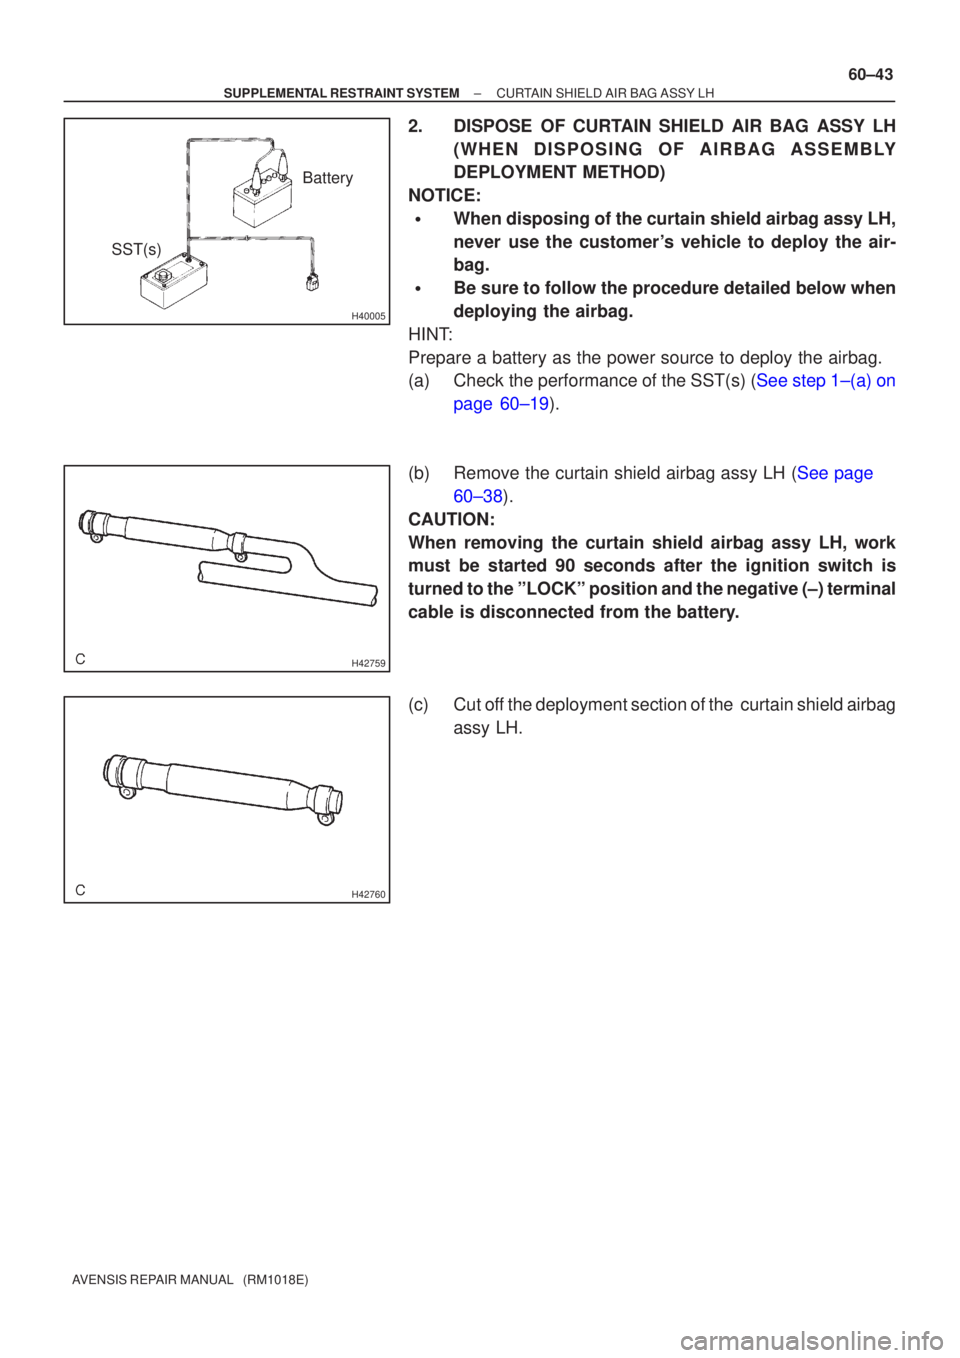 TOYOTA AVENSIS 2005  Service Repair Manual H40005
Battery
SST(s)
H42759
H42760
±
SUPPLEMENTAL RESTRAINT SYSTEM CURTAIN SHIELD AIR BAG ASSY LH
60±43
AVENSIS REPAIR MANUAL   (RM1018E)
2. DISPOSE OF CURTAIN SHIELD AIR BAG ASSY LH
(WHEN DISPOSIN